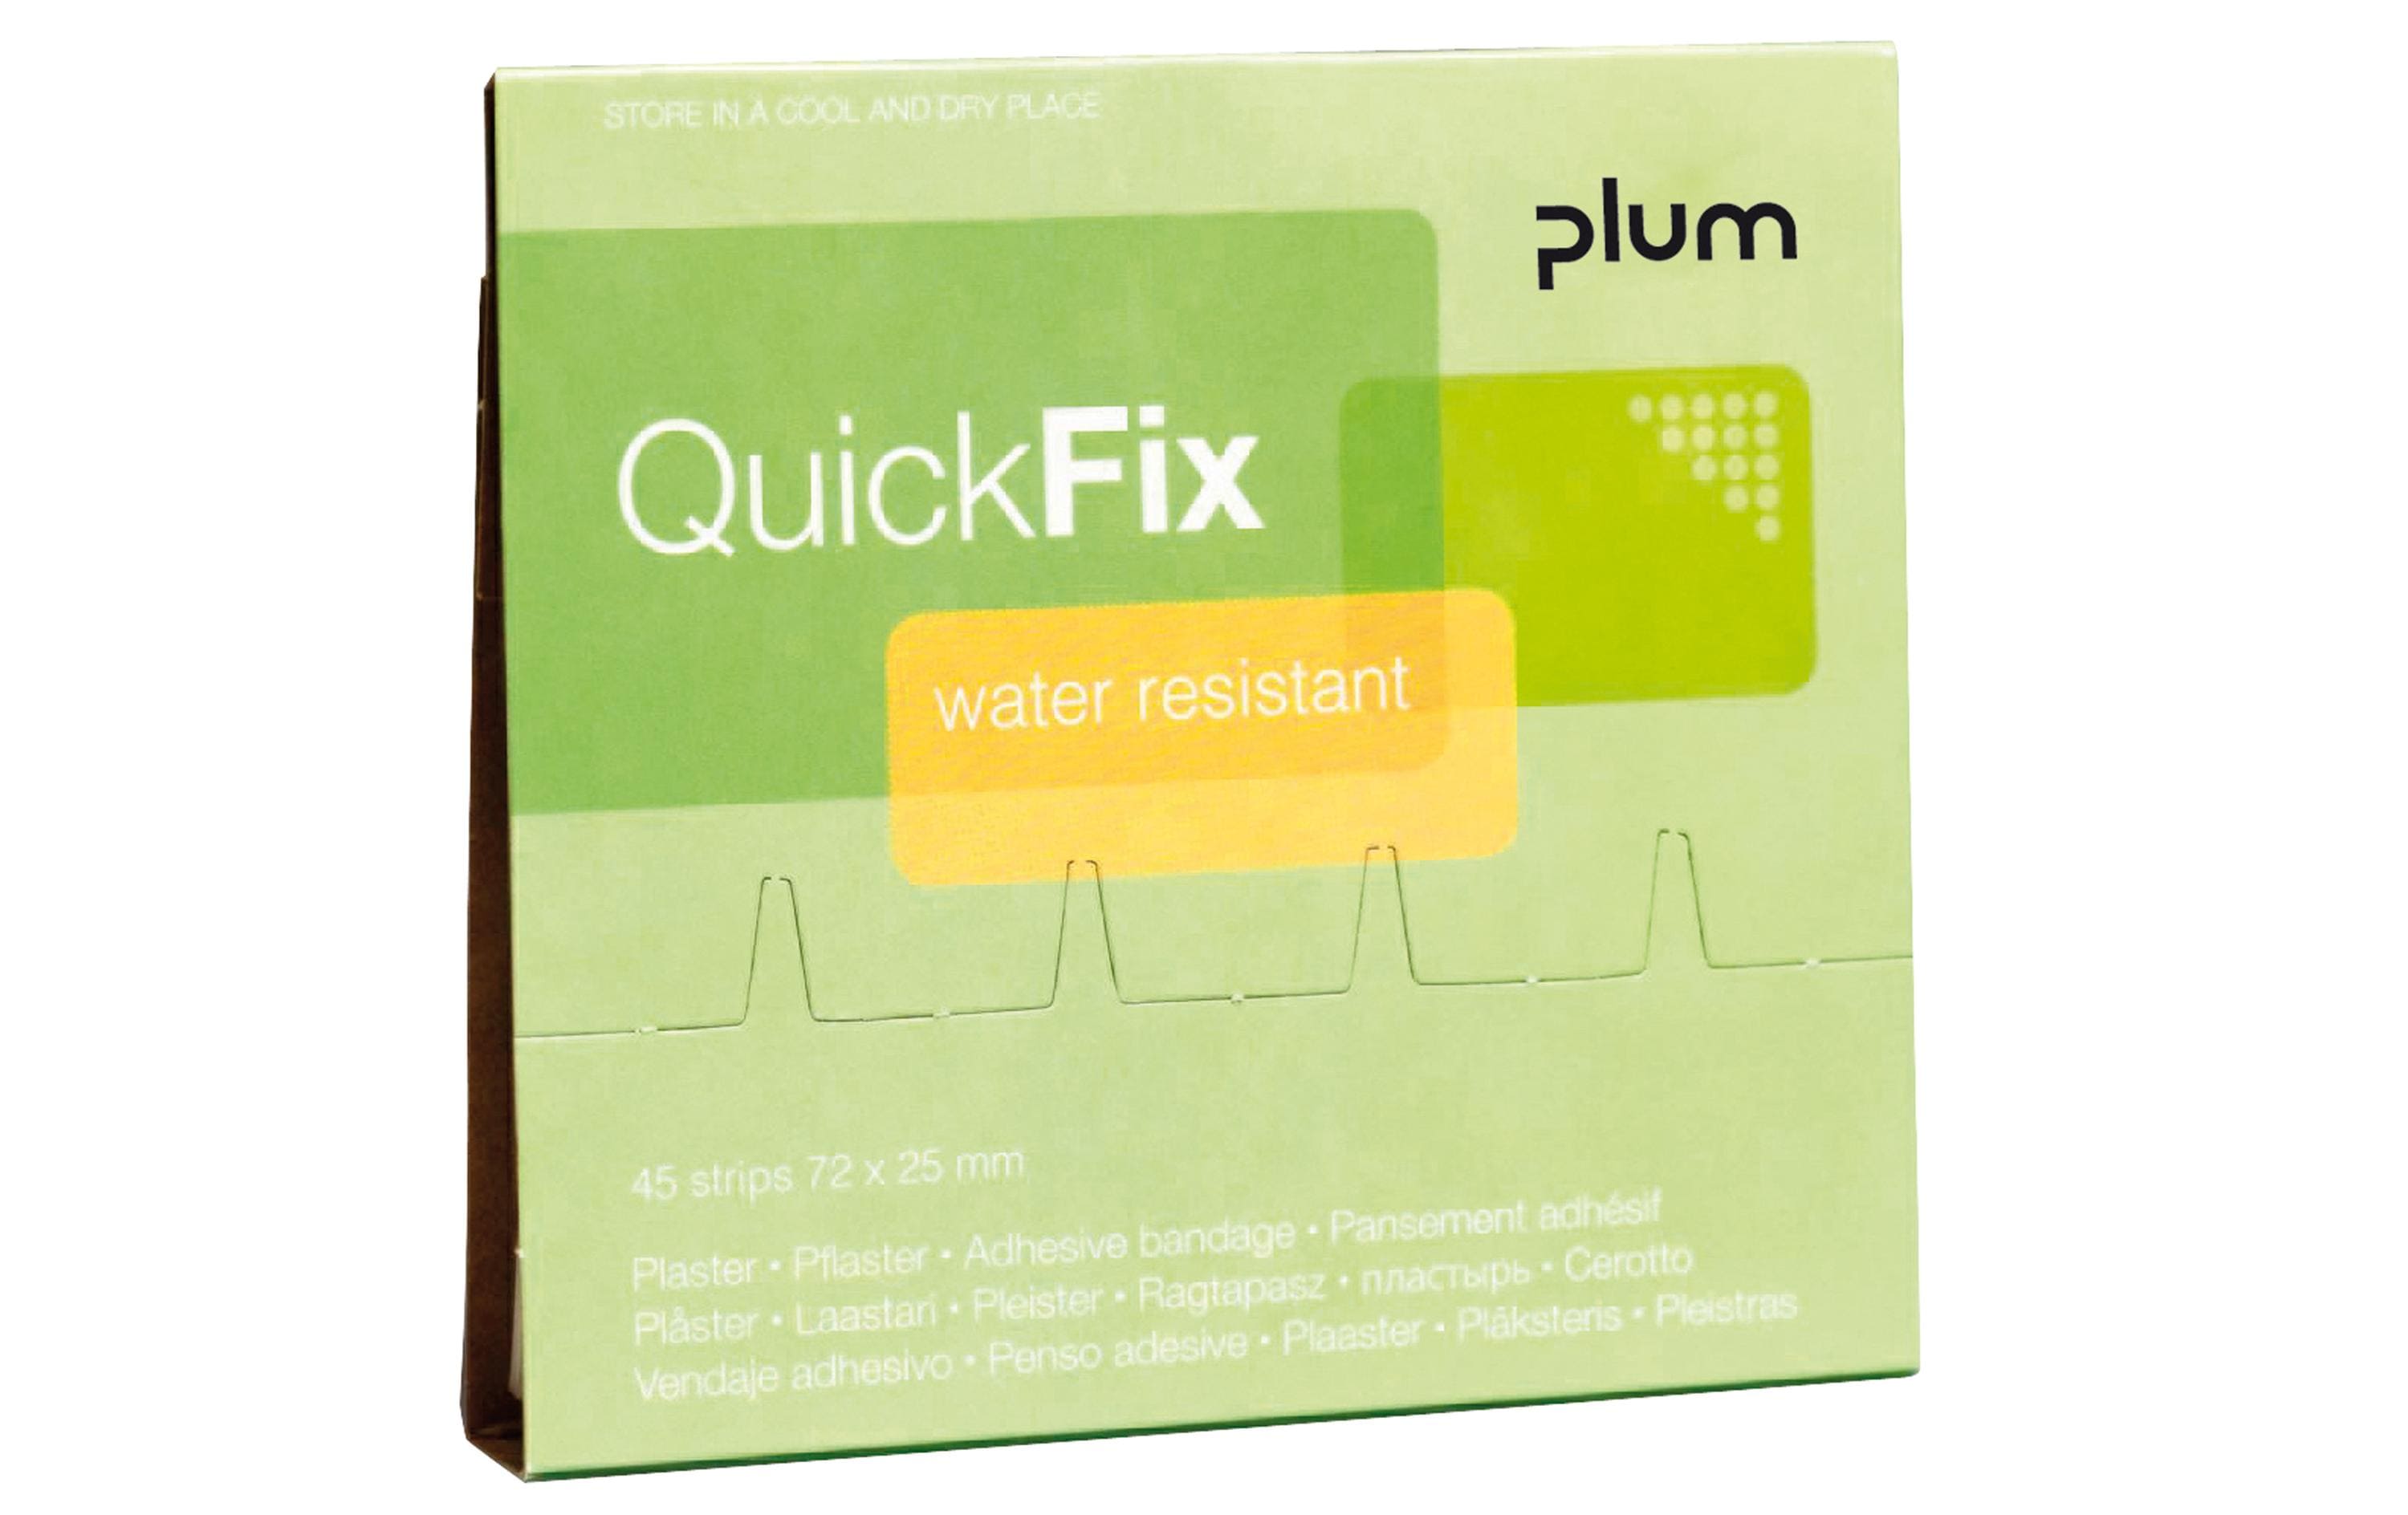 PLUM Water Resistant Pflaster Refill 45 Stück